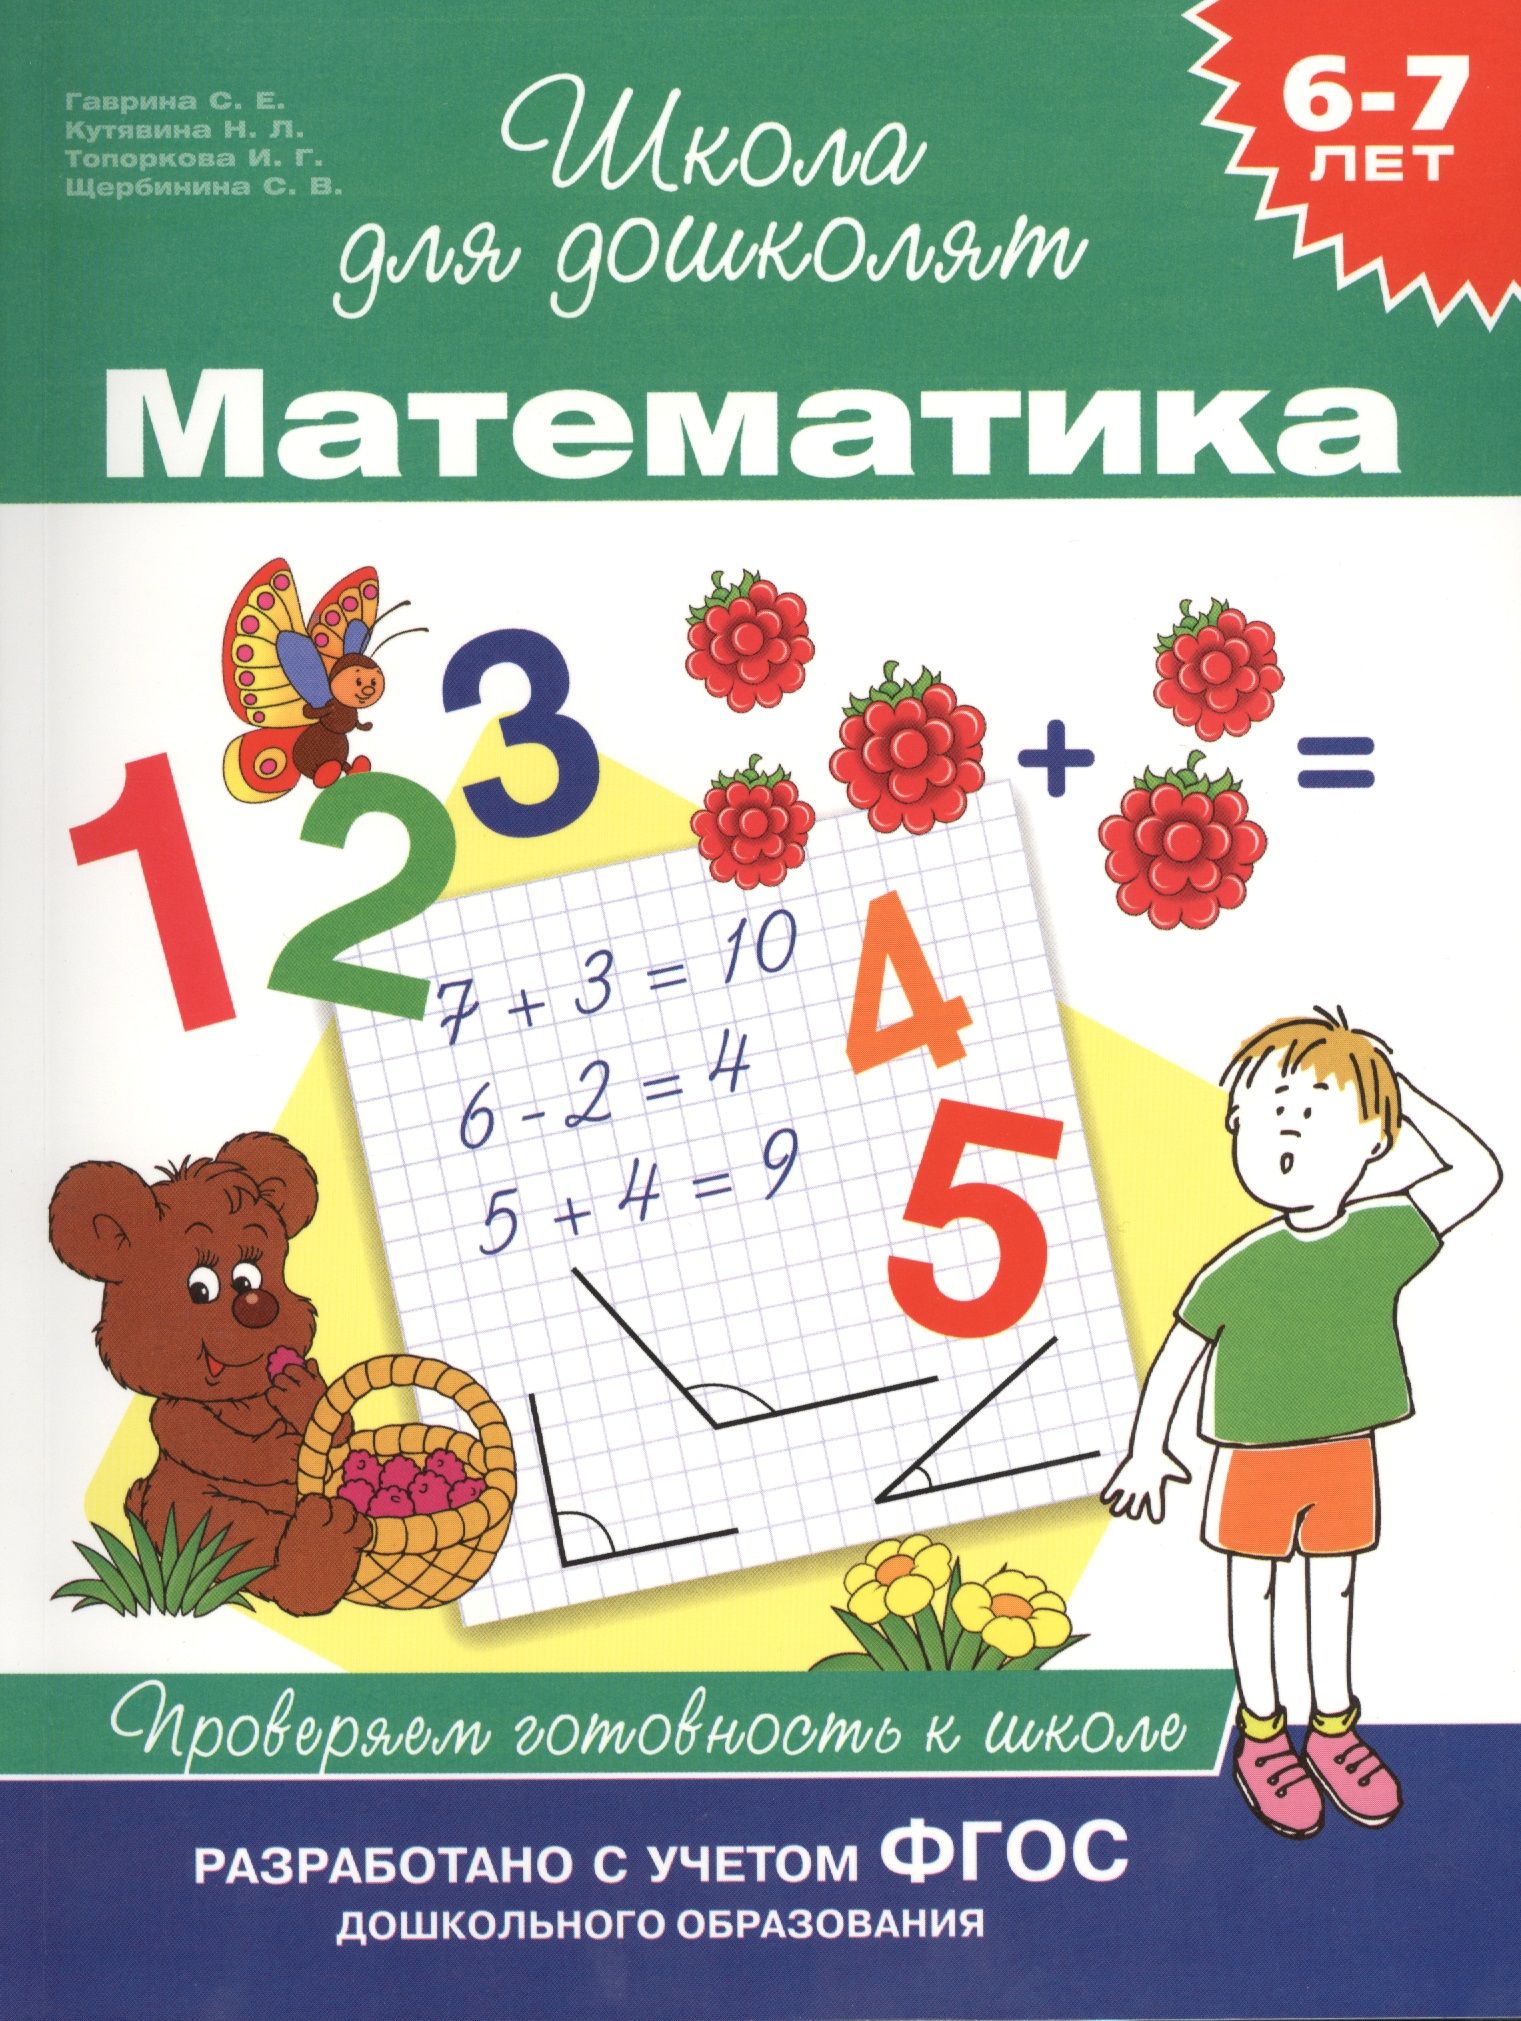 Математика 7 8 9 лет